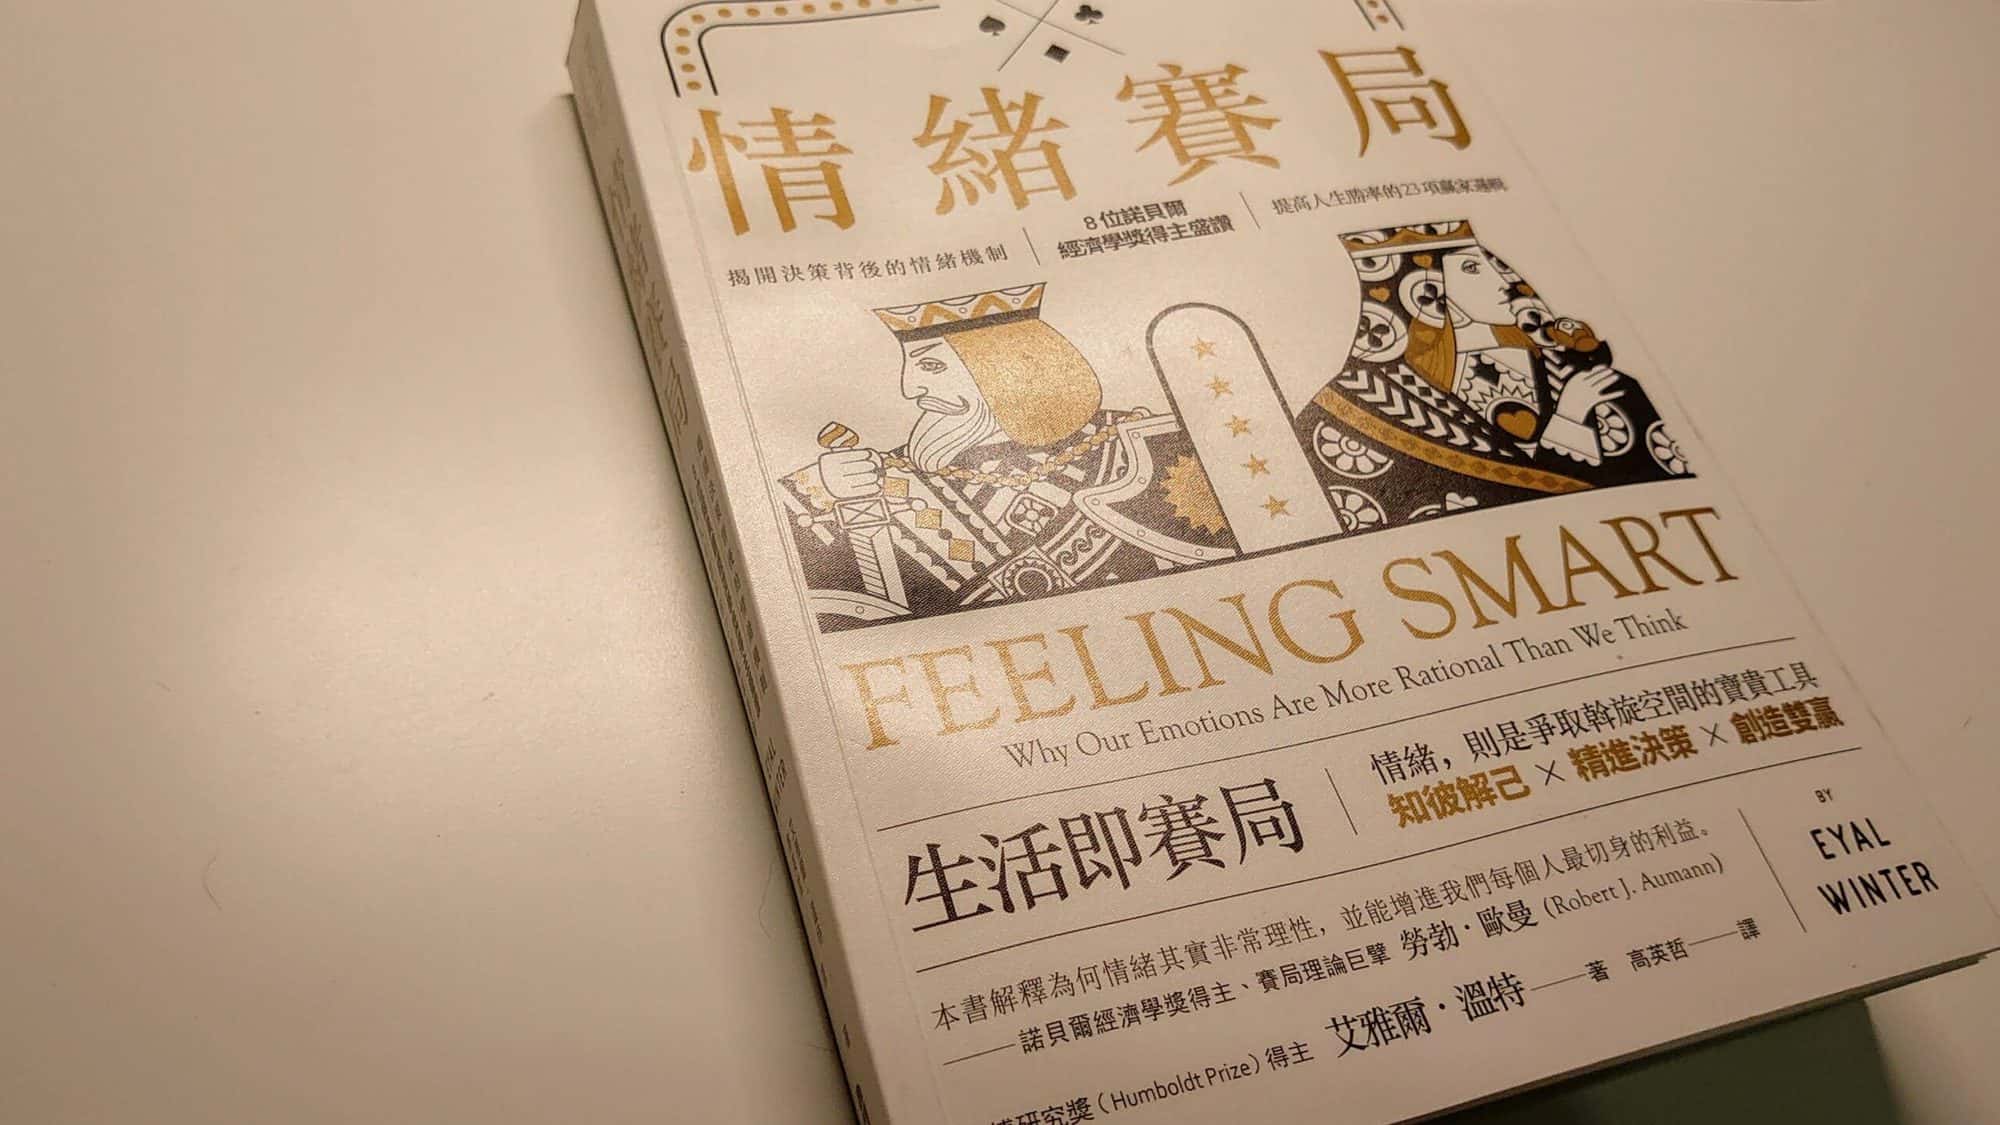 "Feeling Smart"《情緒賽局》 - 封面